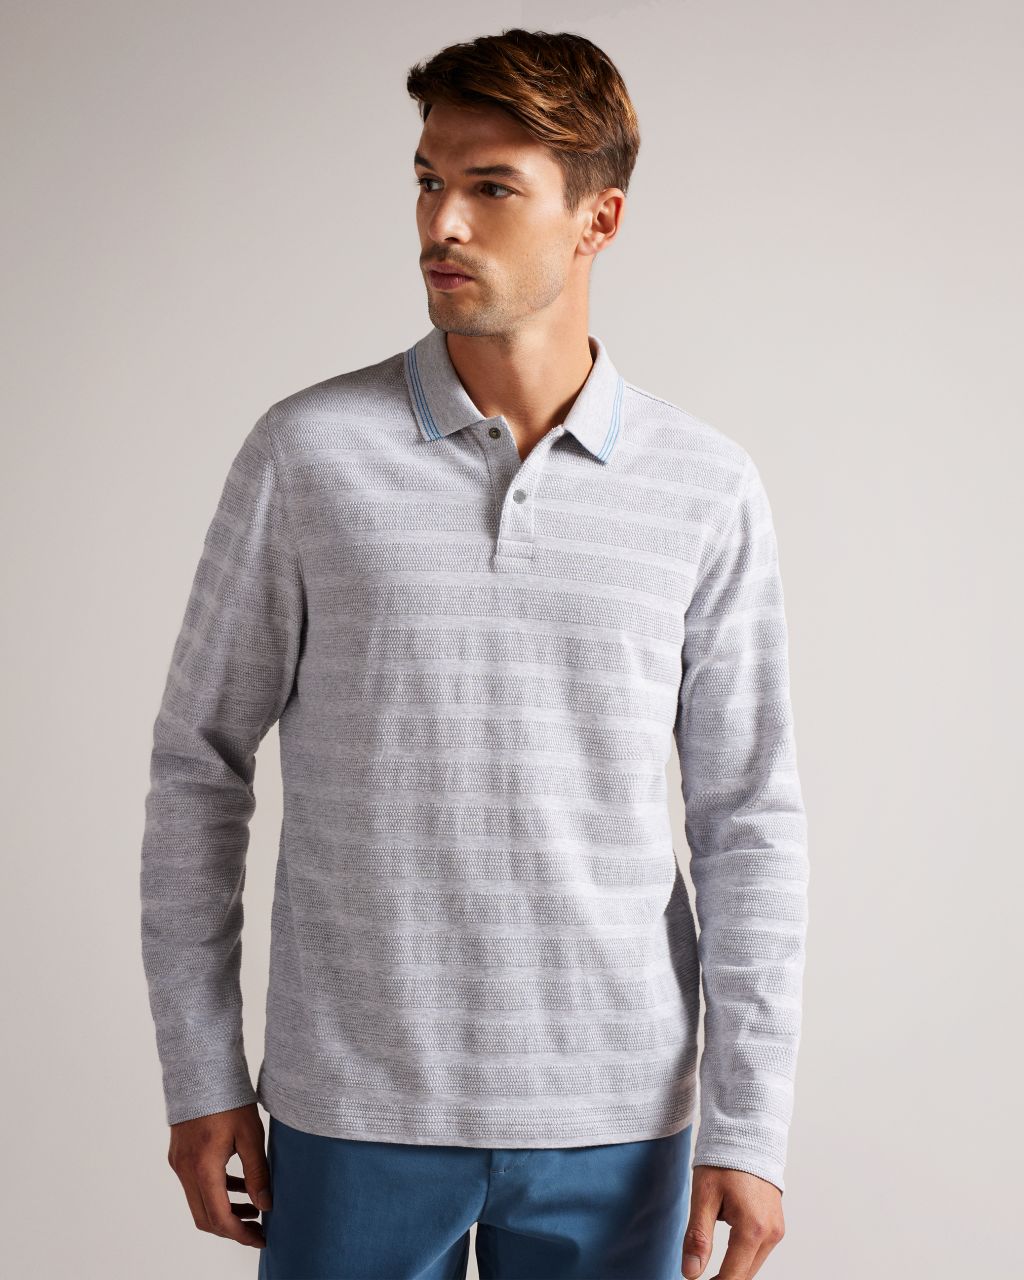 Ted Baker Men's Long Sleeve Textured Stripe Polo Shirt in Gray Marl, Penine, Cotton